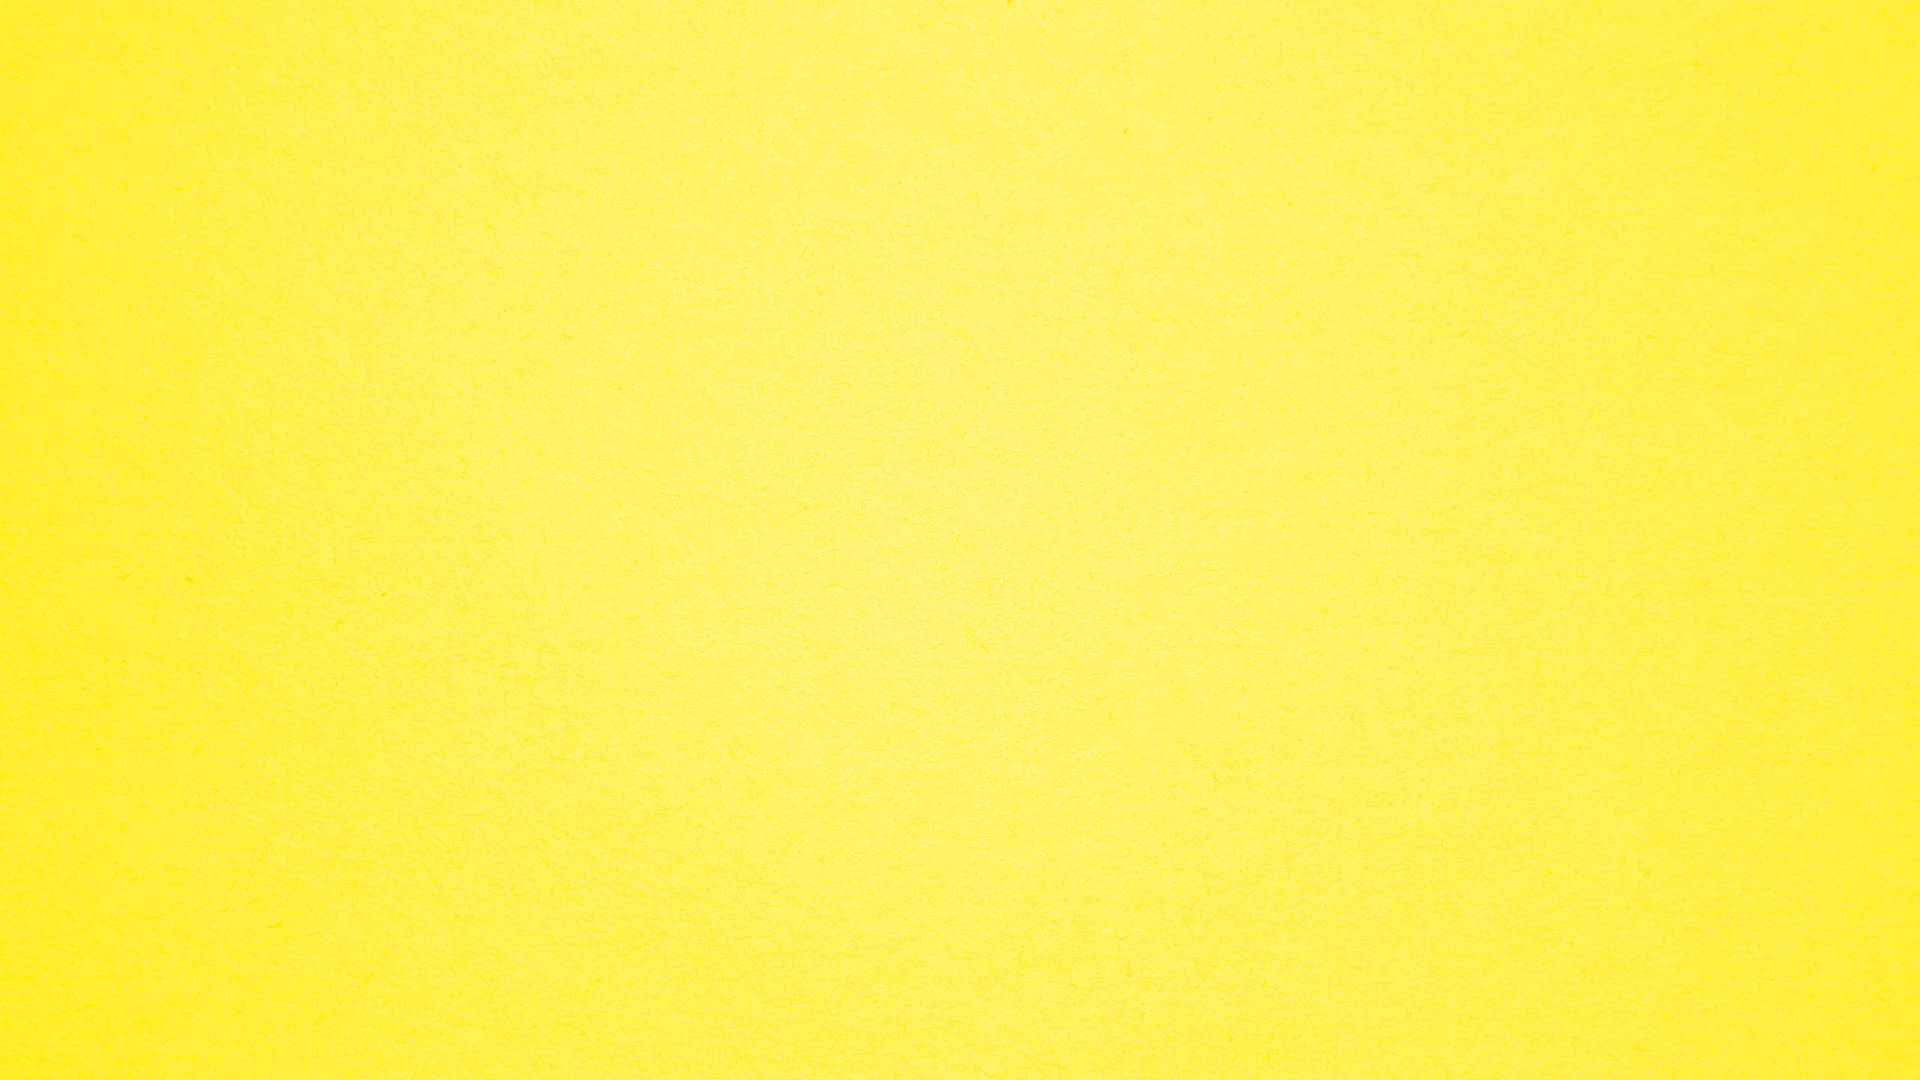 Plain Wallpaper in Sun Yellow | Plain Fleece Children's Wallpaper in Yellow  for Boys and Girls | Plain Wallpaper in Textile Look Ideal for Children's :  Amazon.de: DIY & Tools